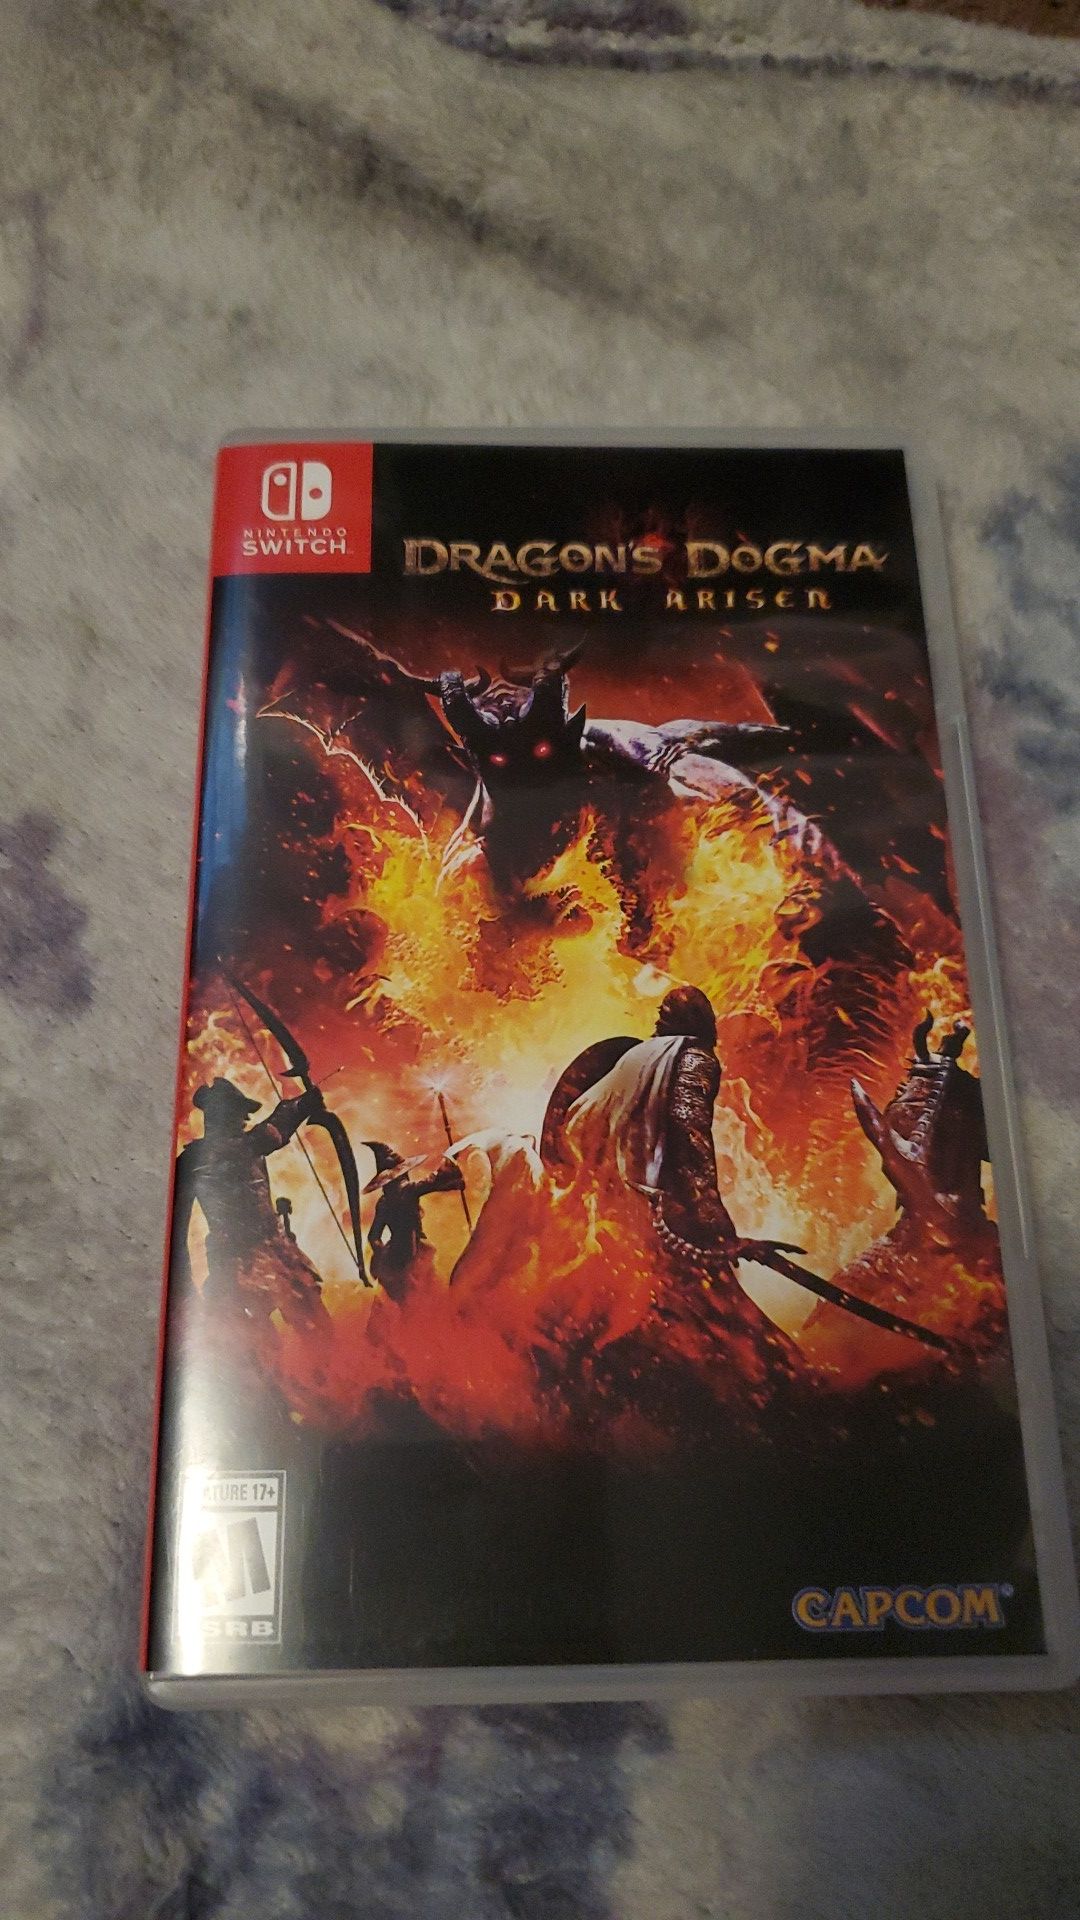 Dragons dogma dark arisen for Nintendo switch